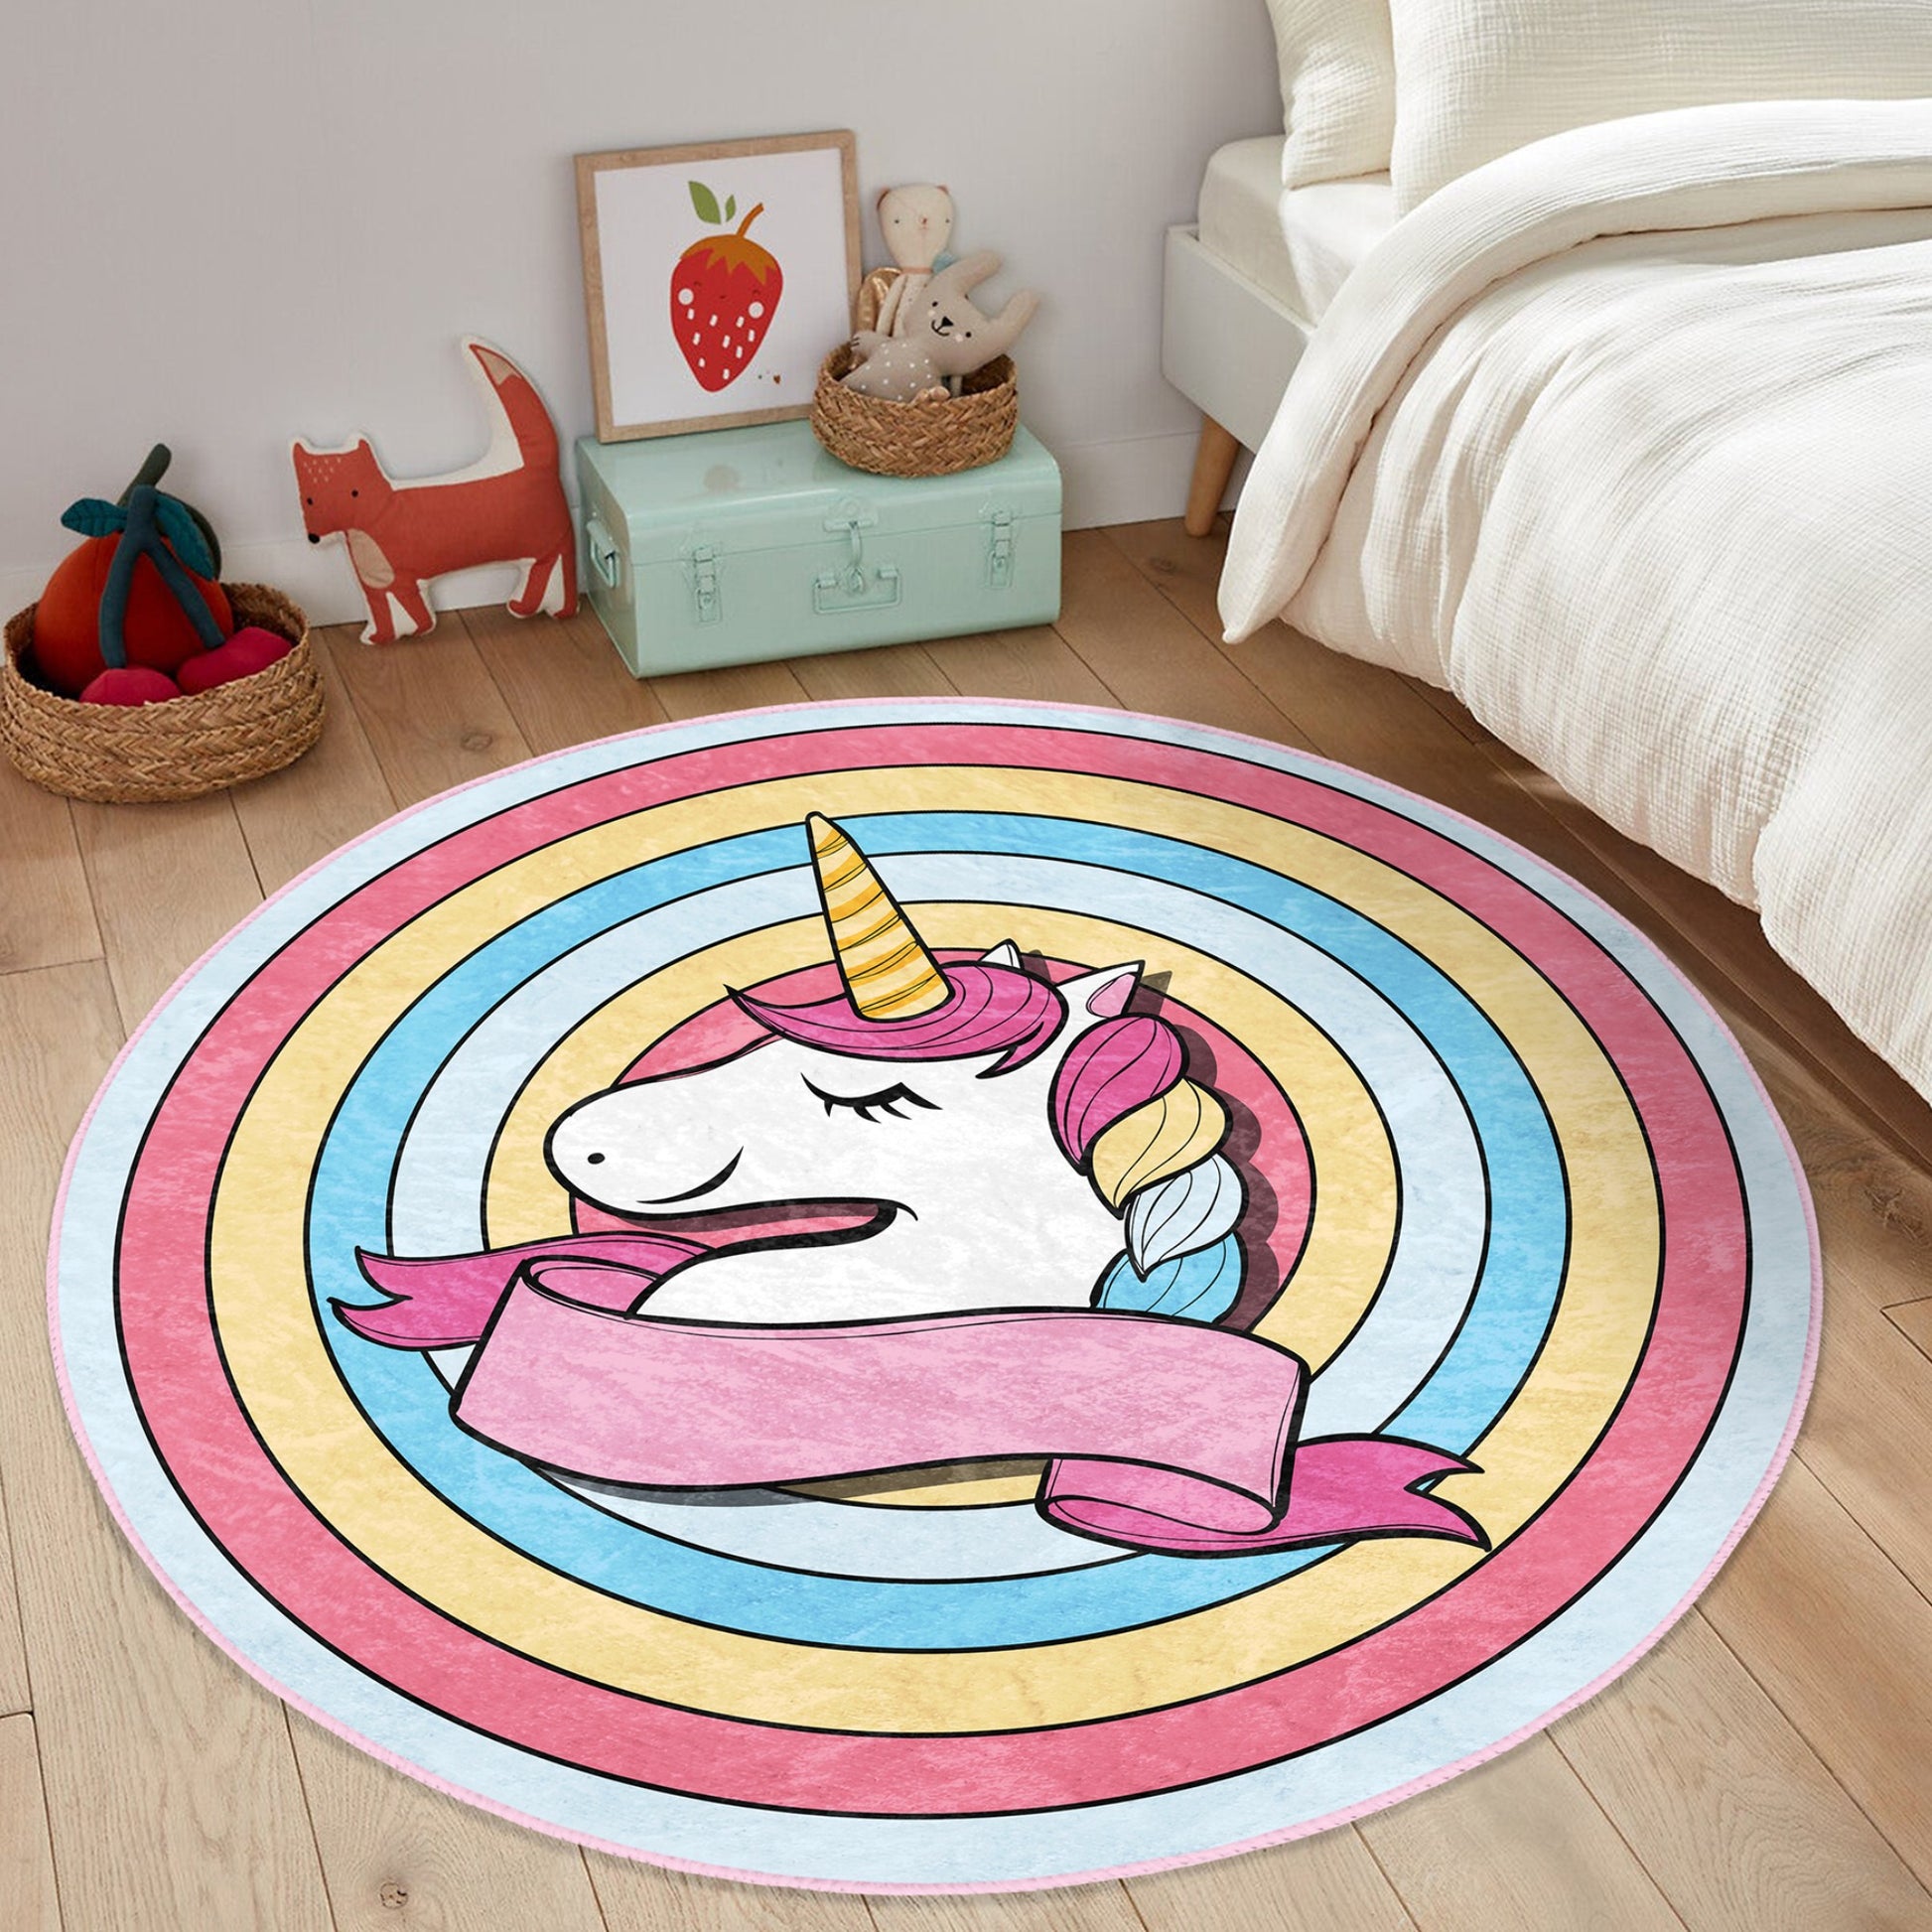 Round Rainbow Unicorn Patterned Floor Rug - Charming Charm